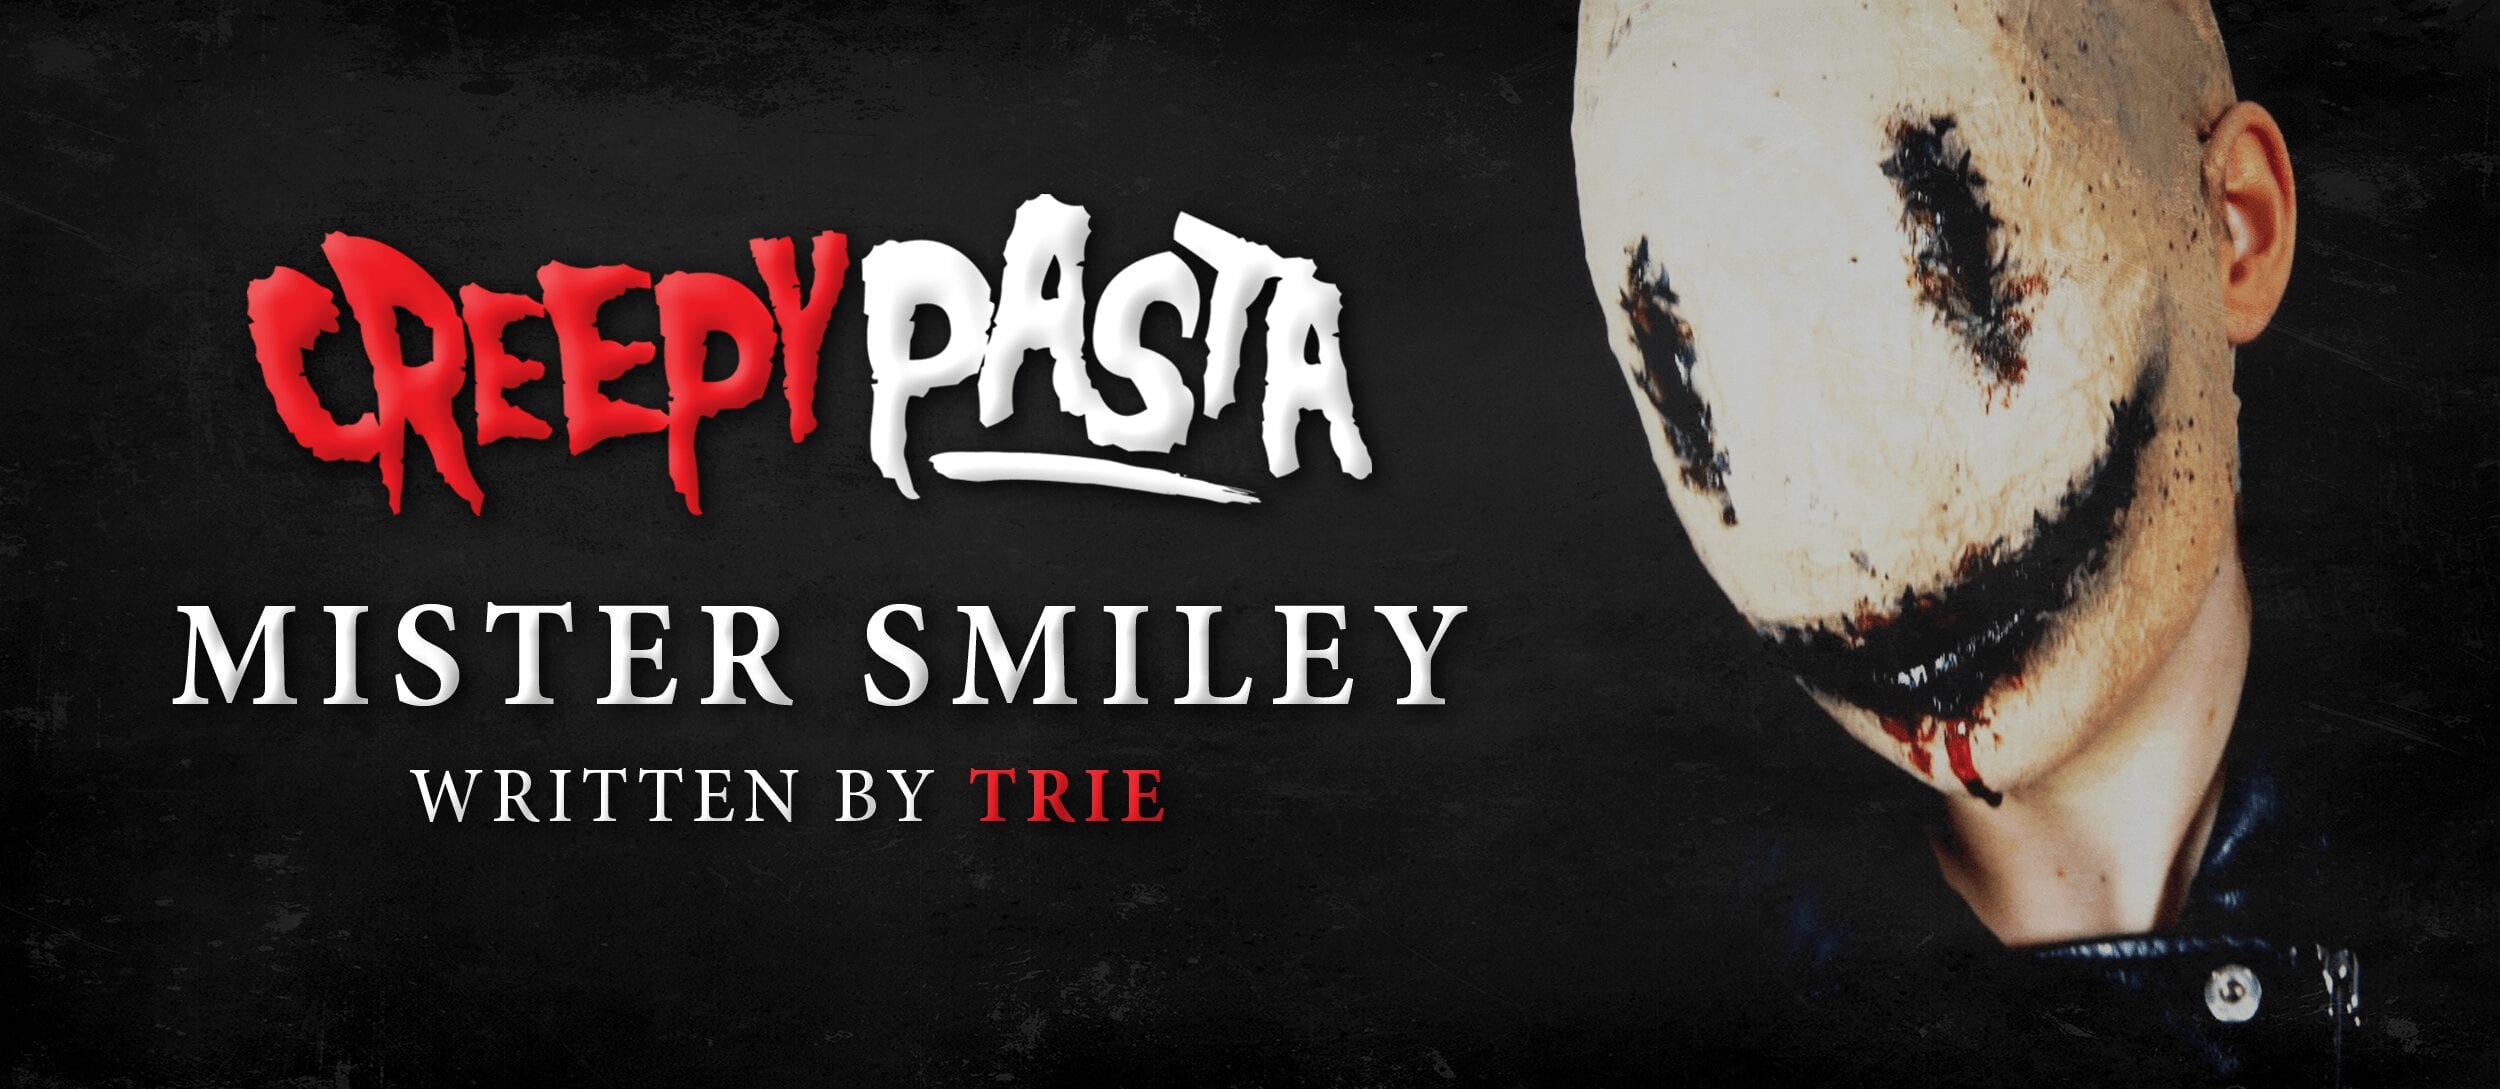 Mister Smiley - Creepypasta. 